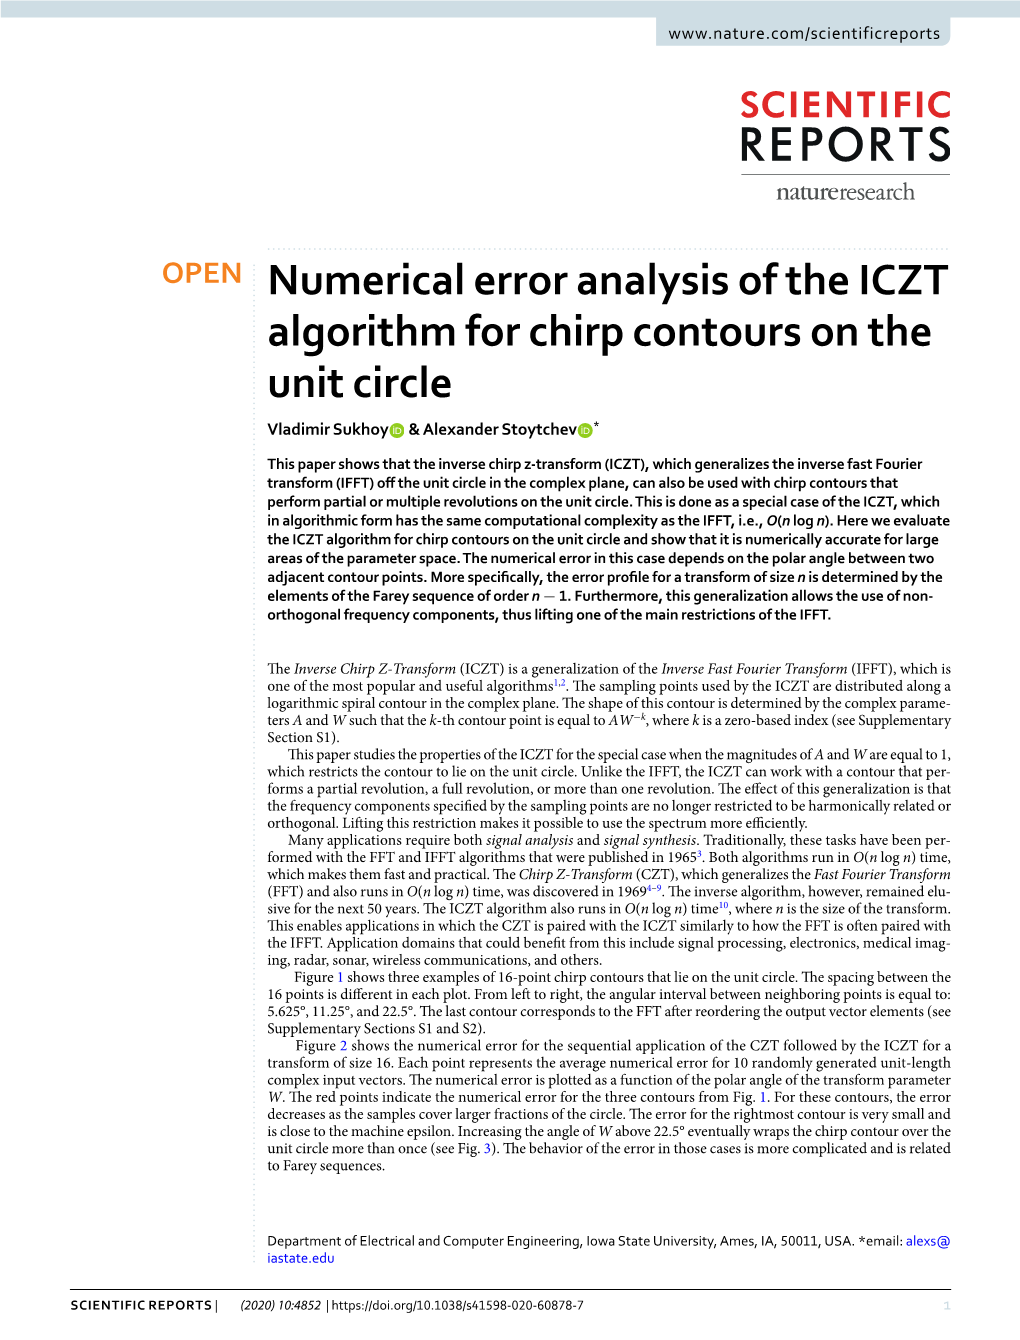 Numerical Error Analysis of the ICZT Algorithm for Chirp Contours on the Unit Circle Vladimir Sukhoy & Alexander Stoytchev *